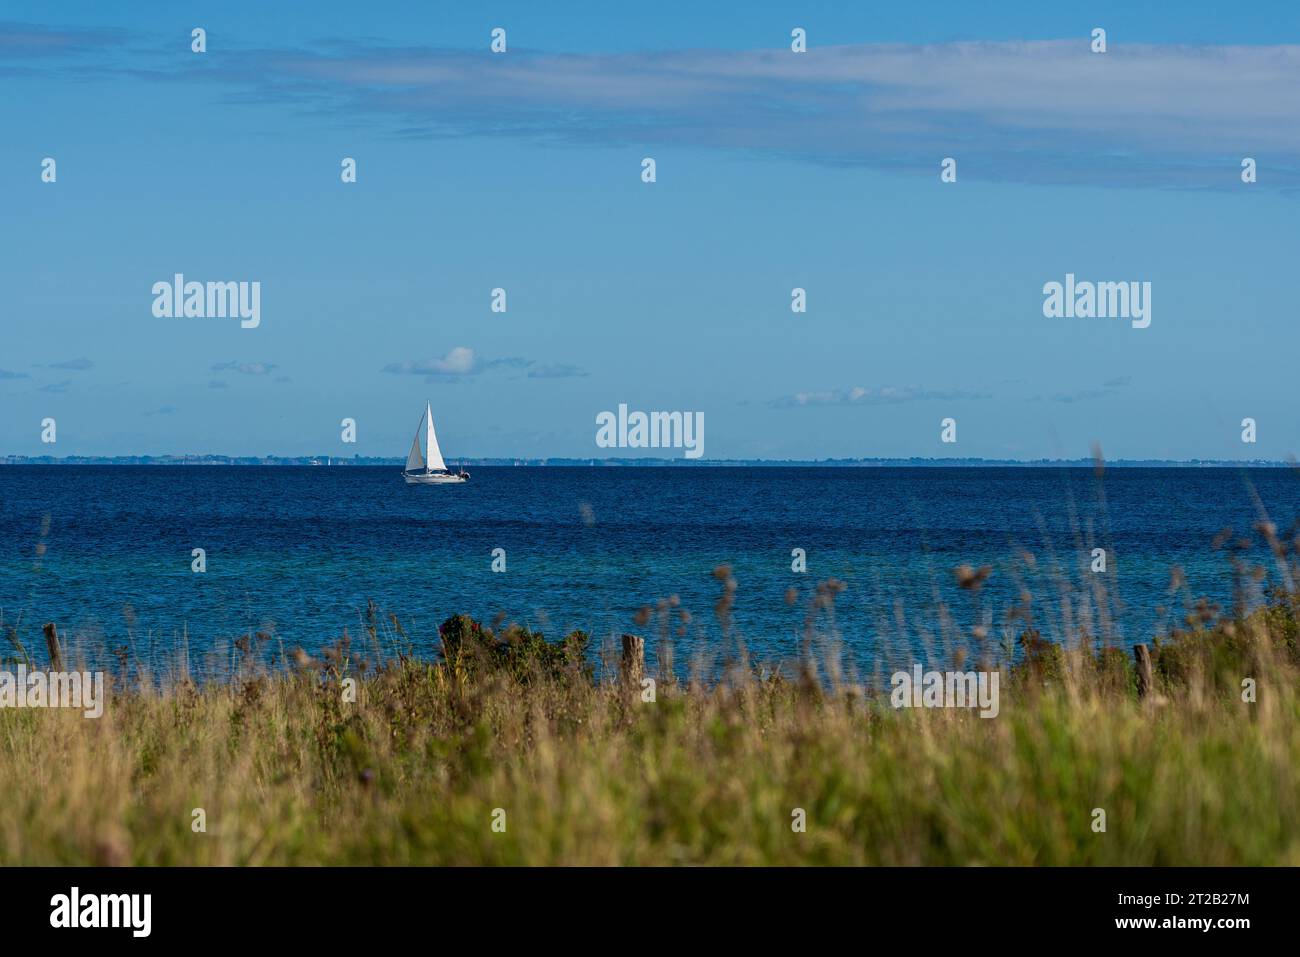 Sailing ship on the Baltic Sea, Germany. Stock Photo